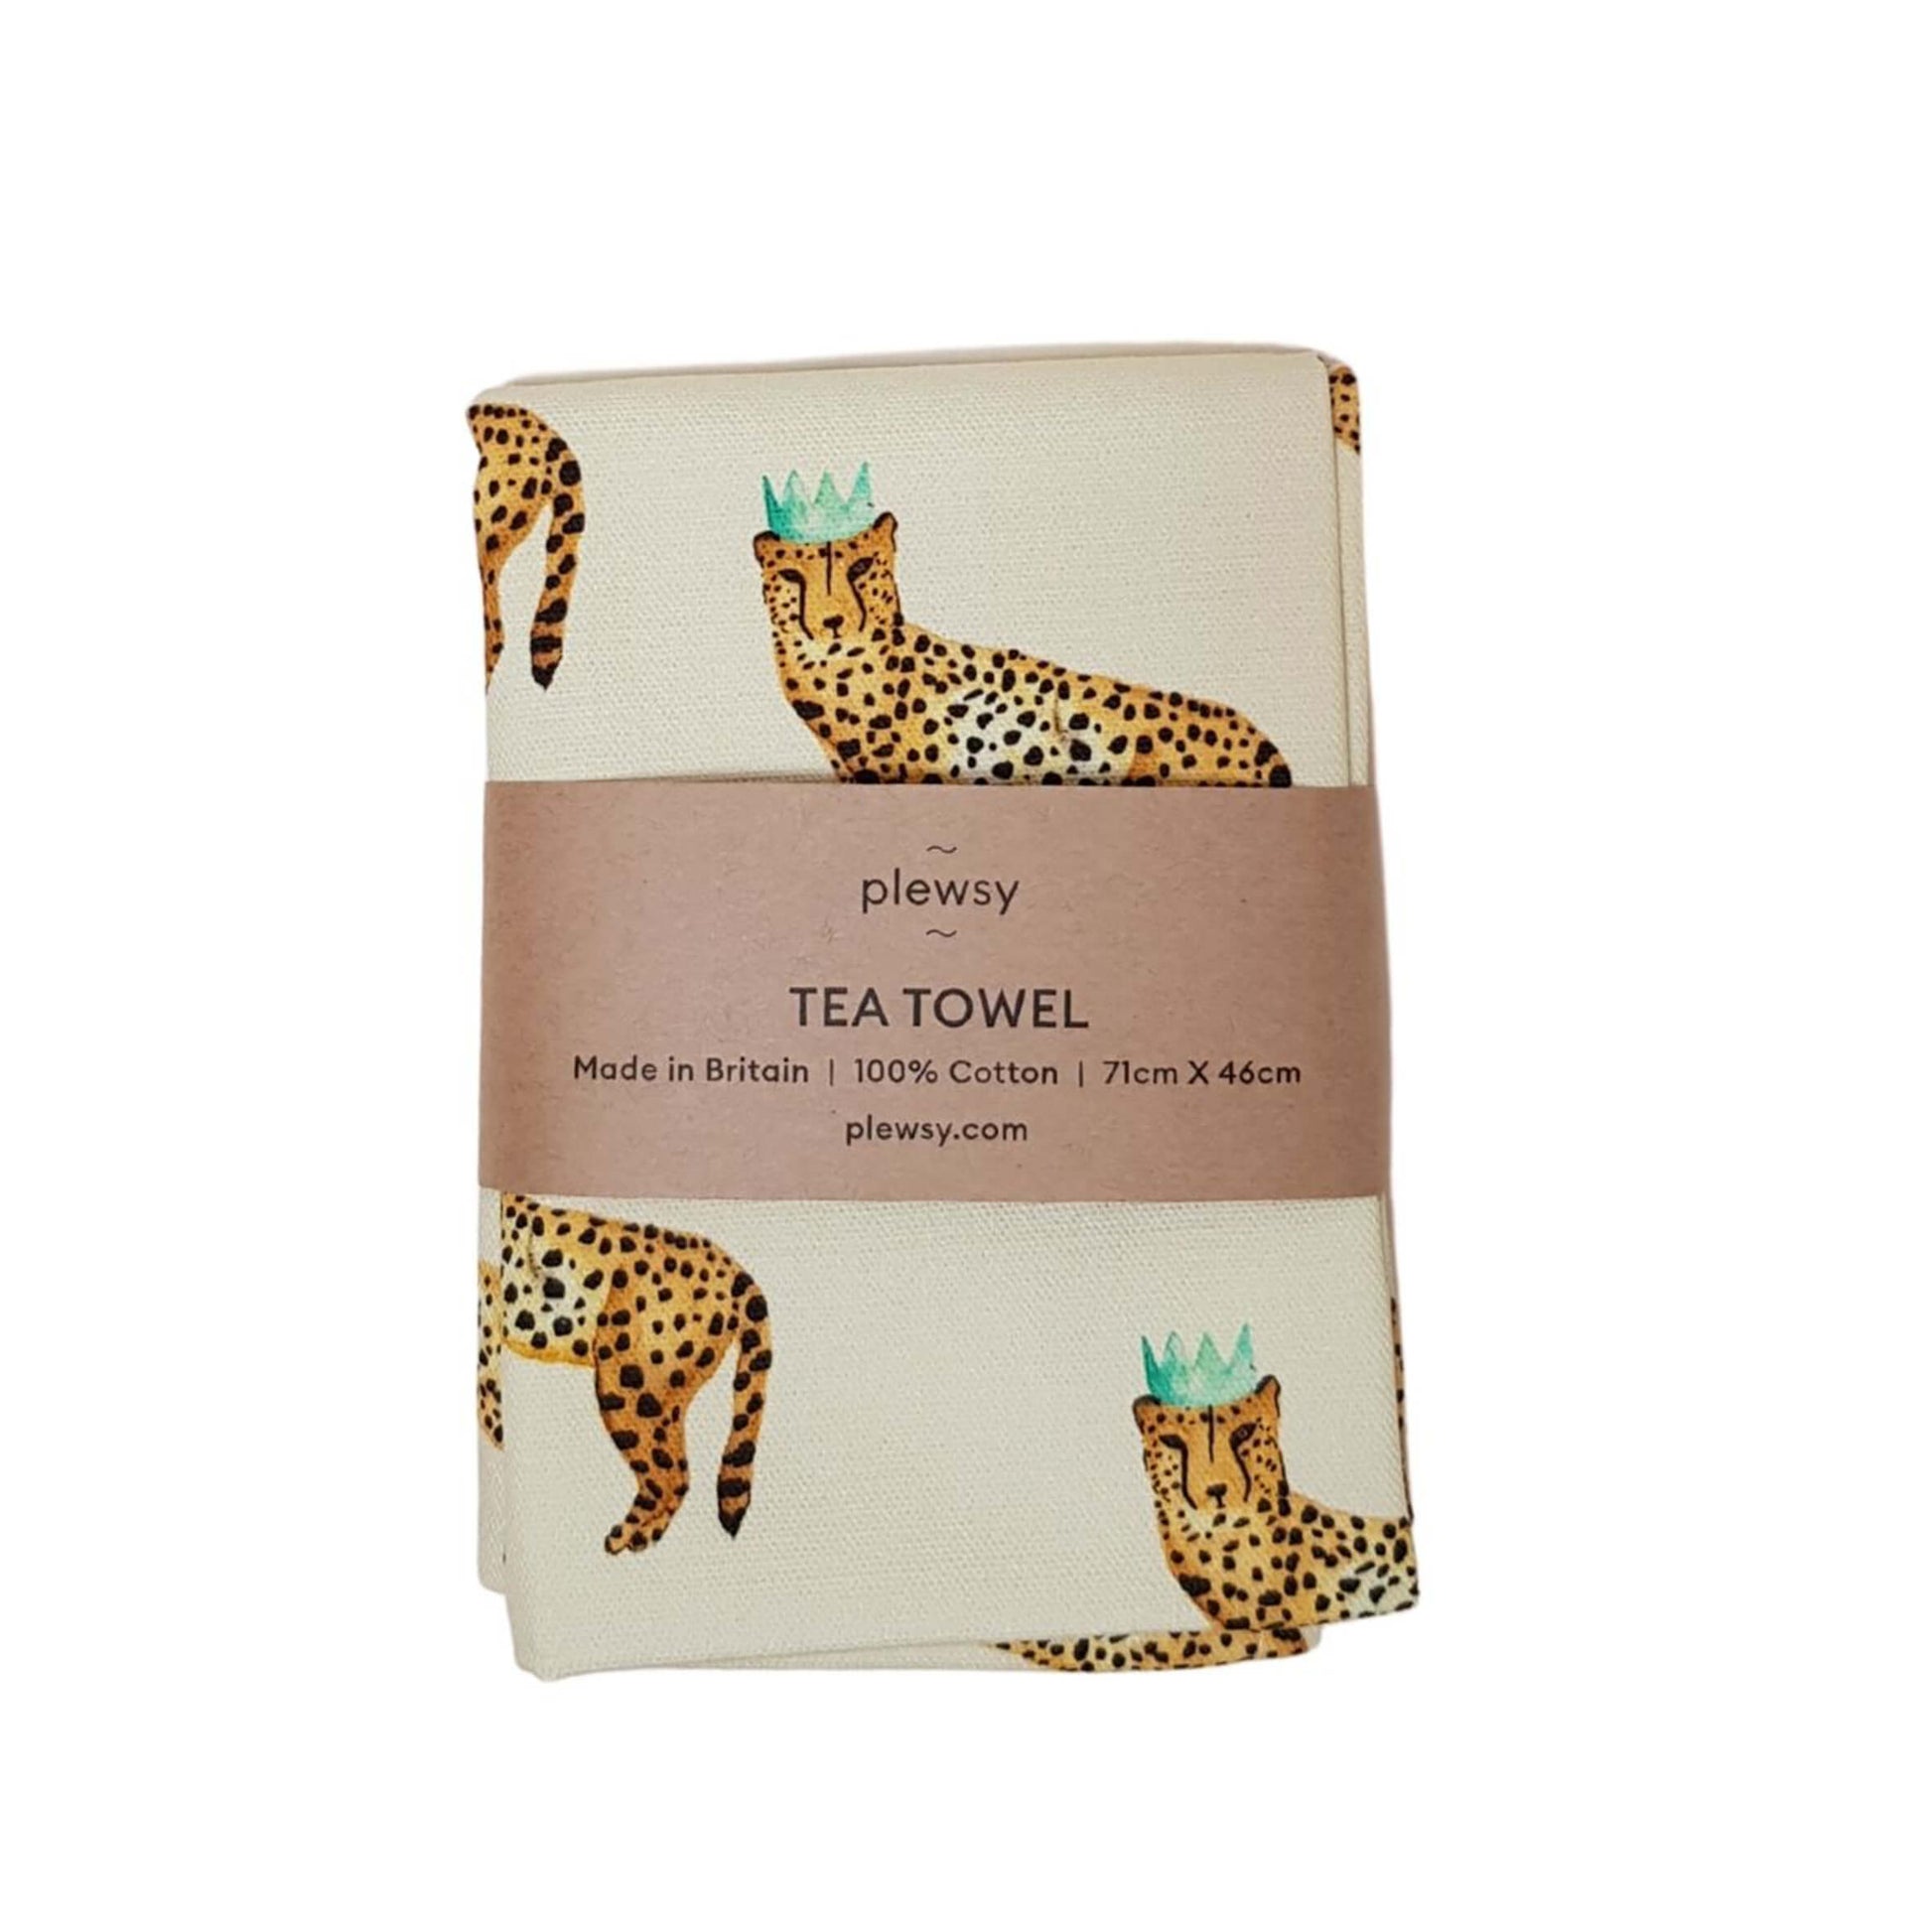 cheetah-tea-towel-plewsy